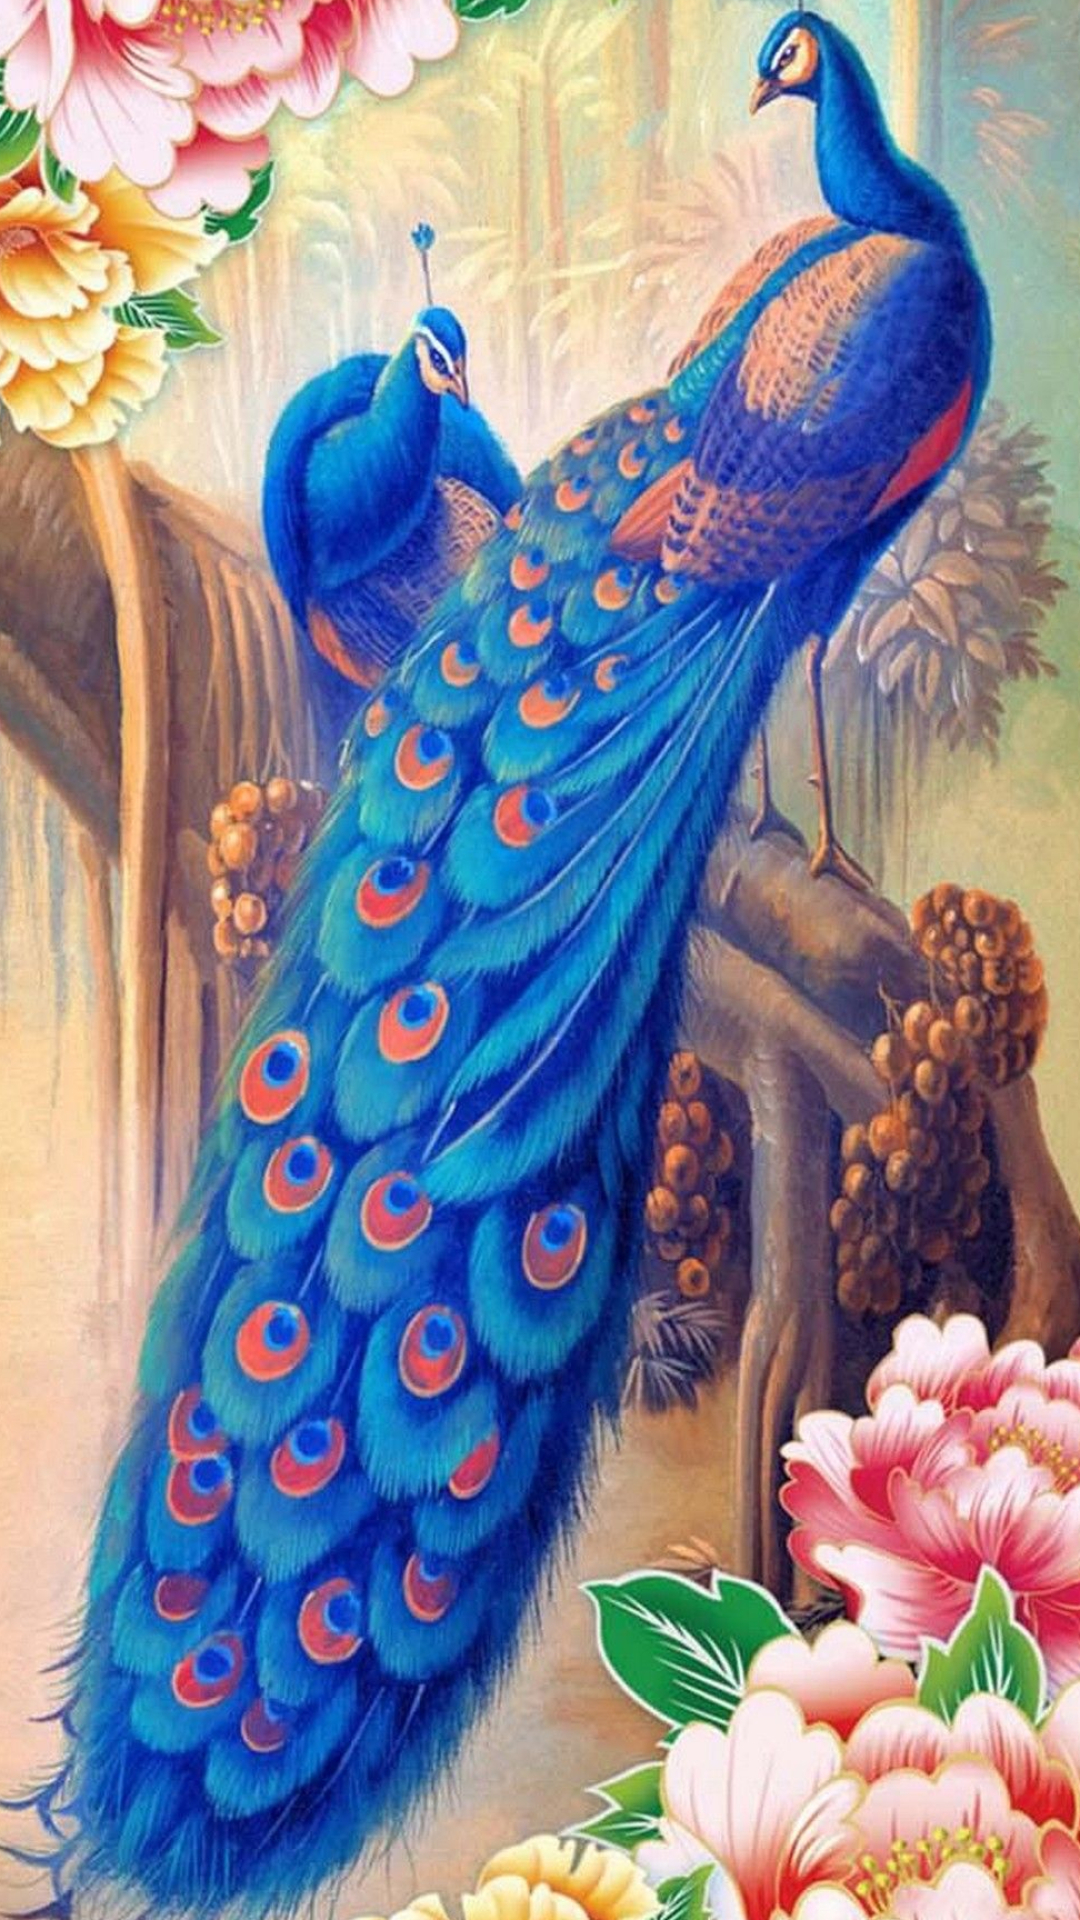 1080x1920 Beauty Peacock Wallpaper For Mobile | Best HD Wallpapers | Peacock painting, Painting wallpaper, Peacock art